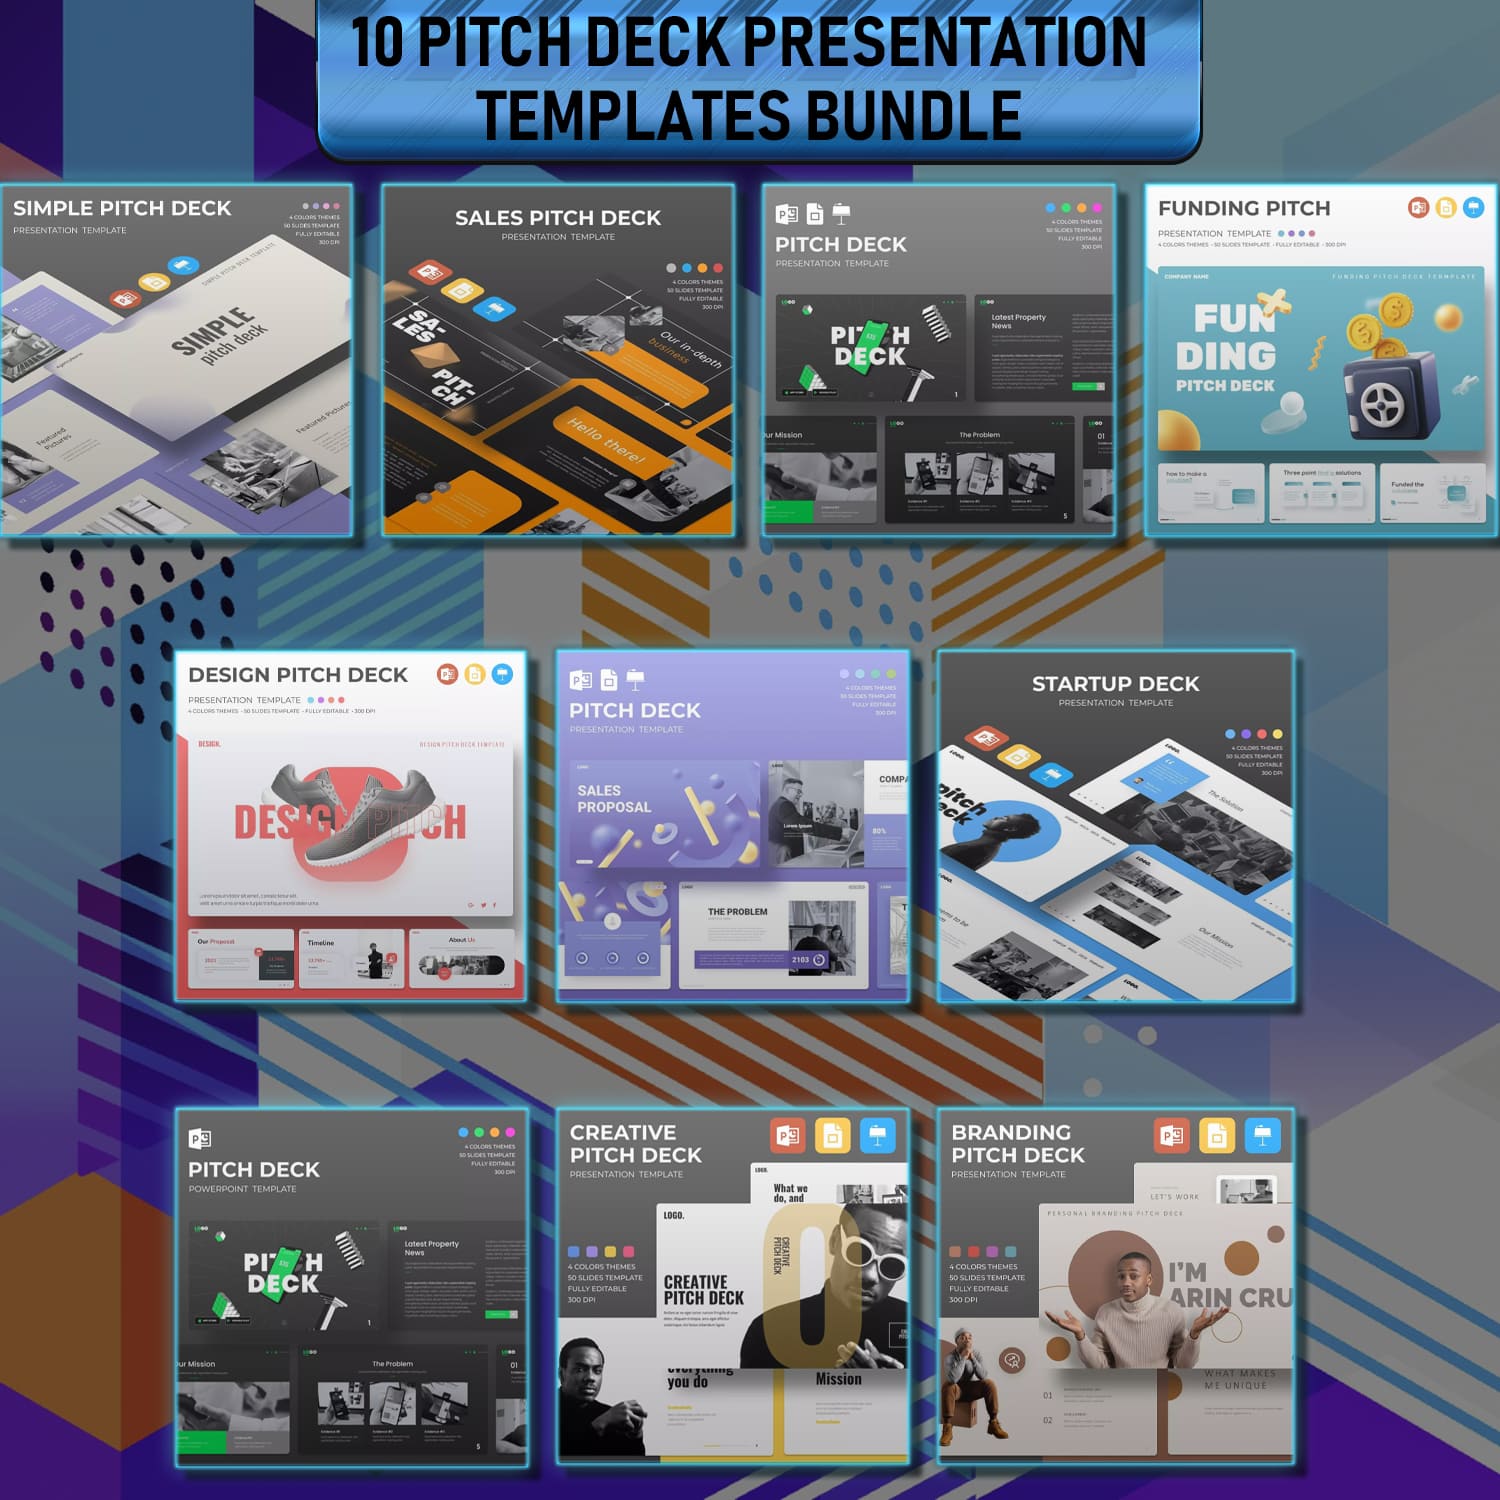 Pitch Deck Presentation Templates Bundle cover image.